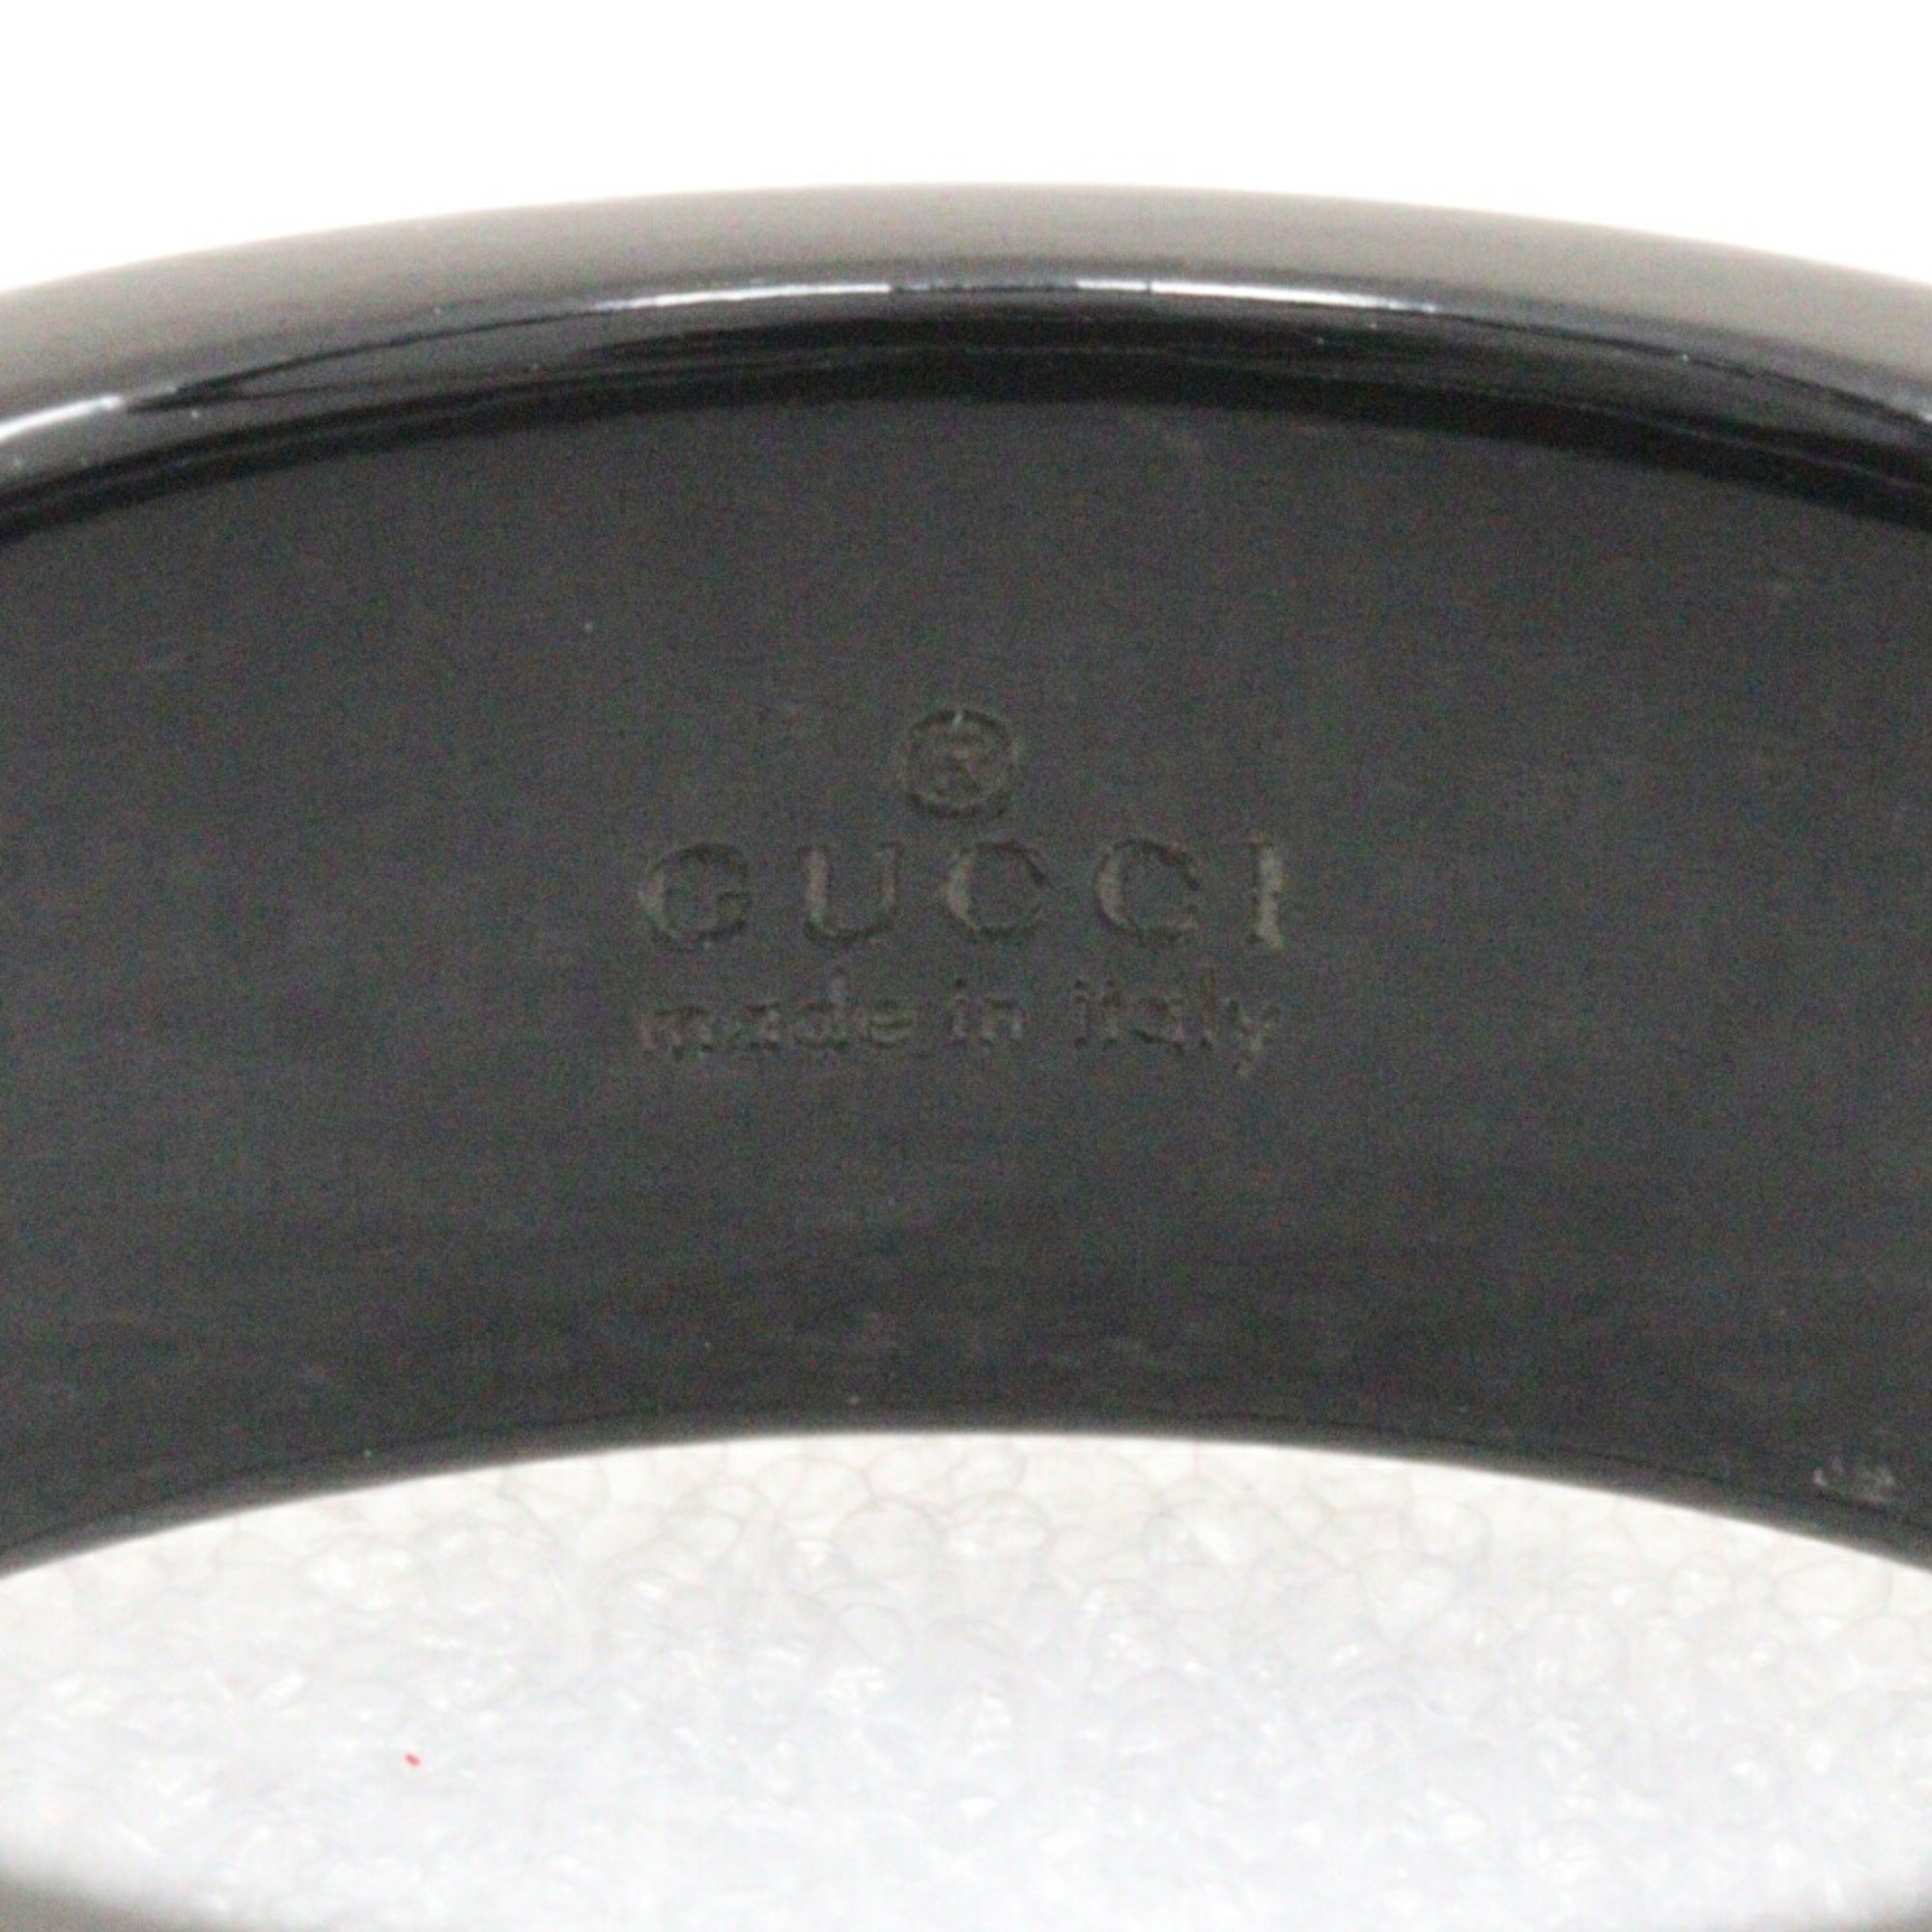 Gucci Icon Thin Band Size 14.5 Ring, K18 White Gold x Corundum Black, Approx. 2.2g, Band, Unisex